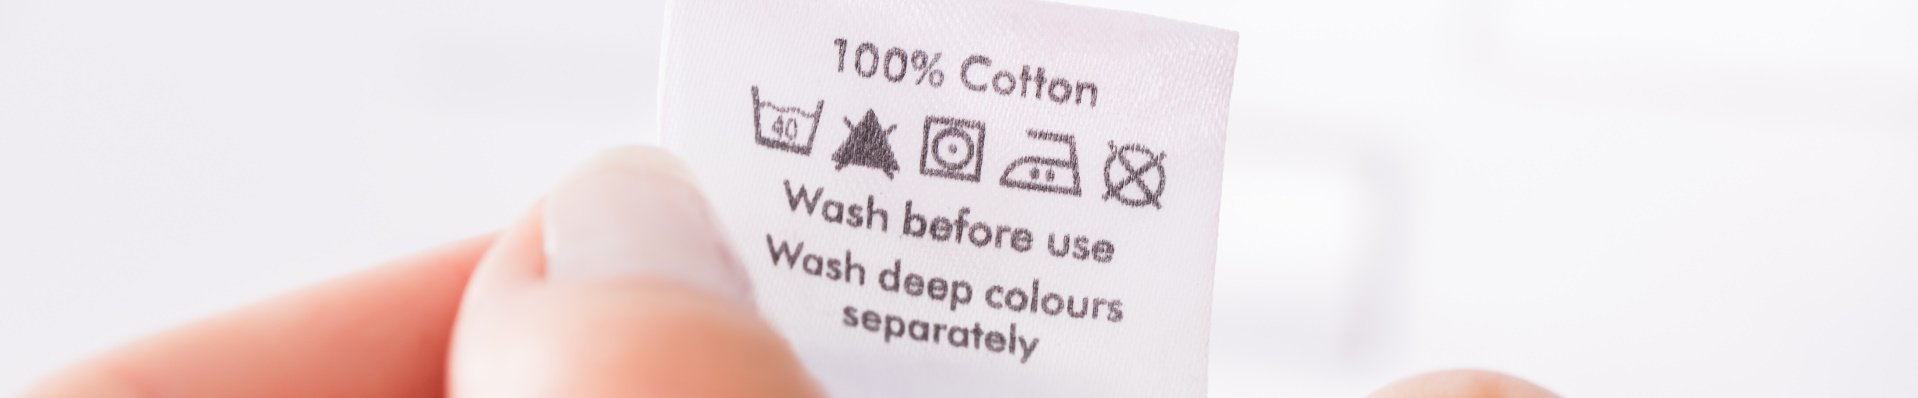 simboli lavaggio etichette vestiti